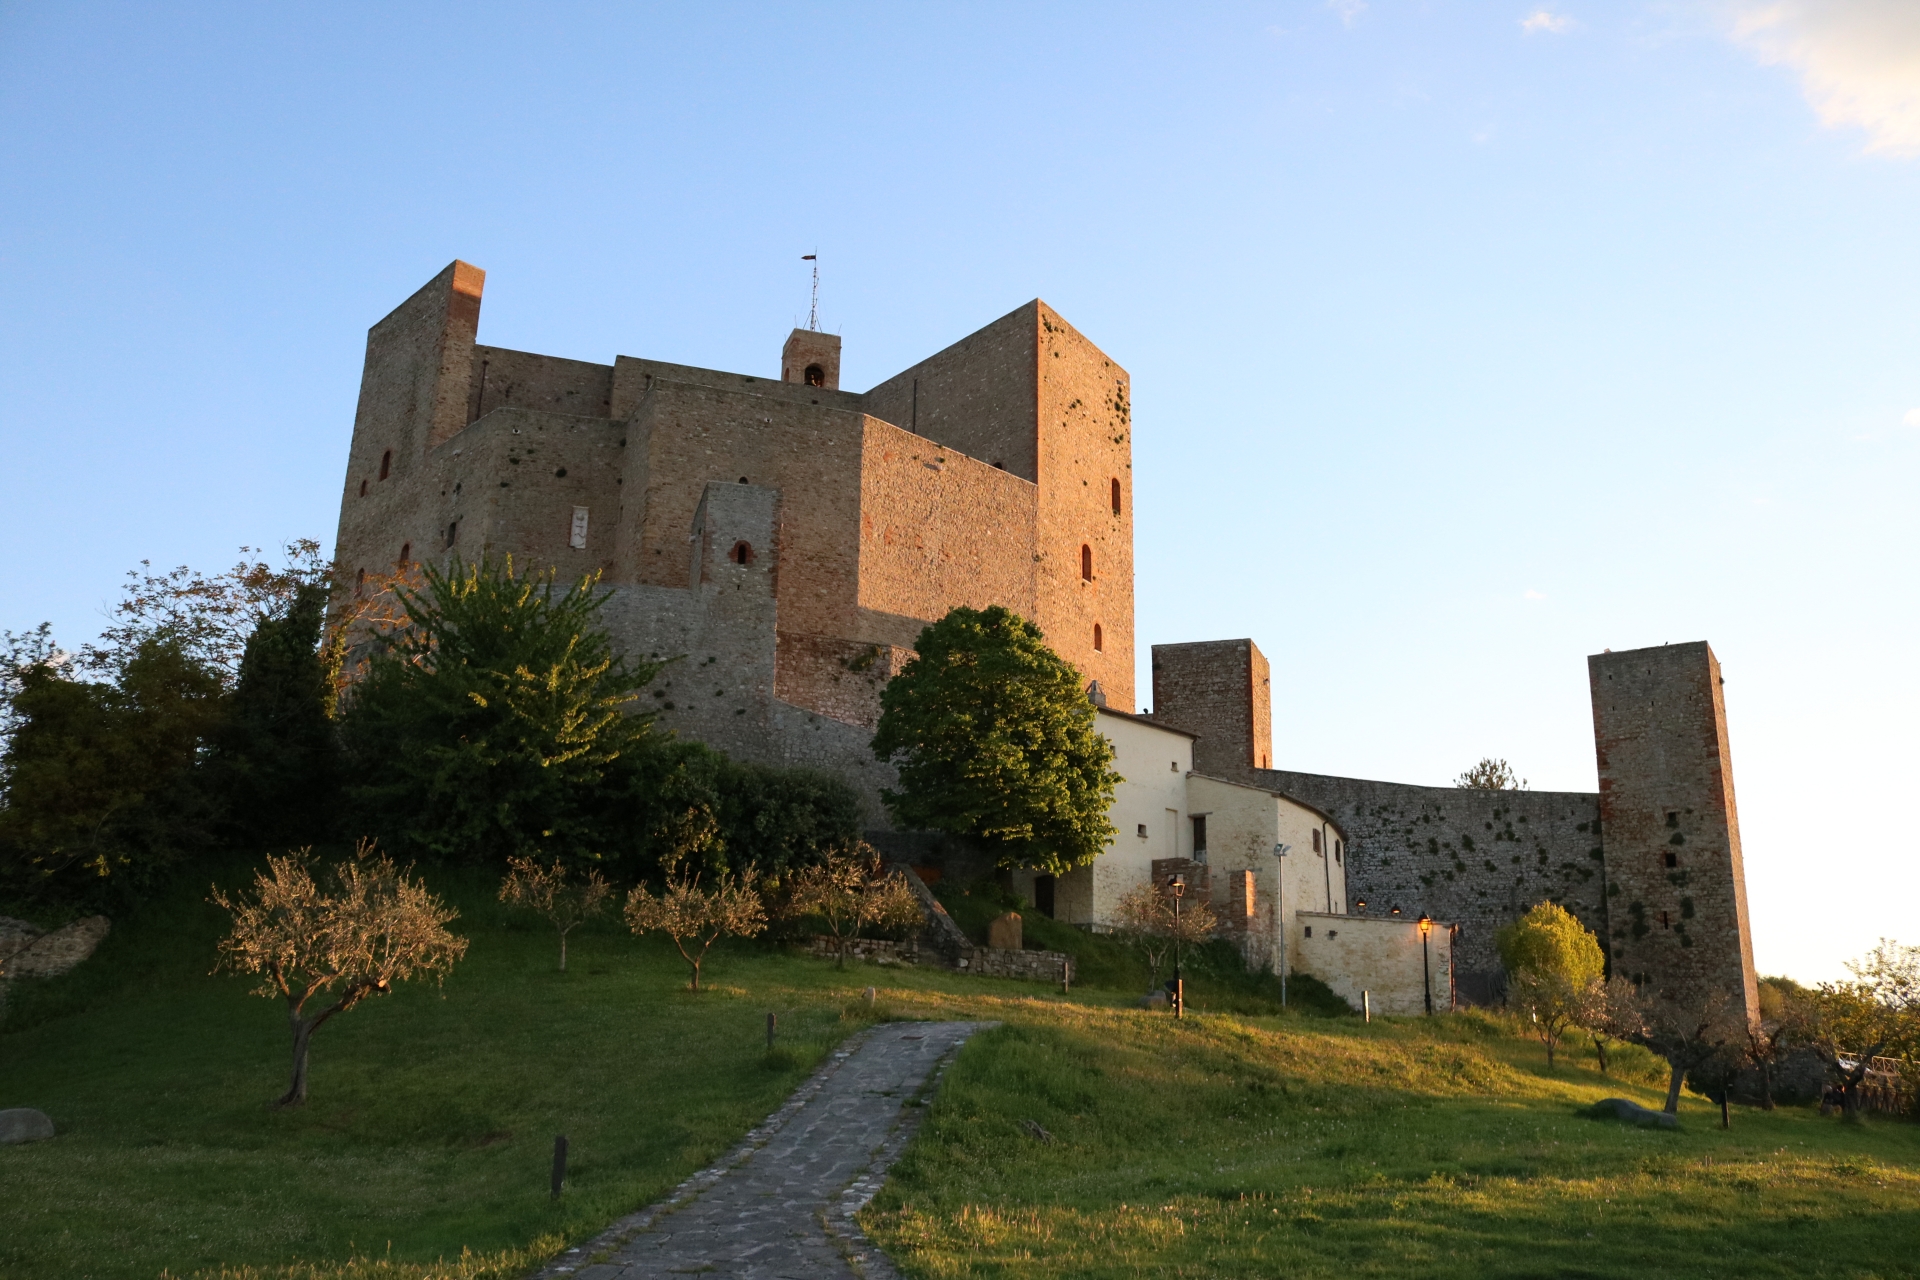 Montefiore Conca Castle photo by Lara Braga